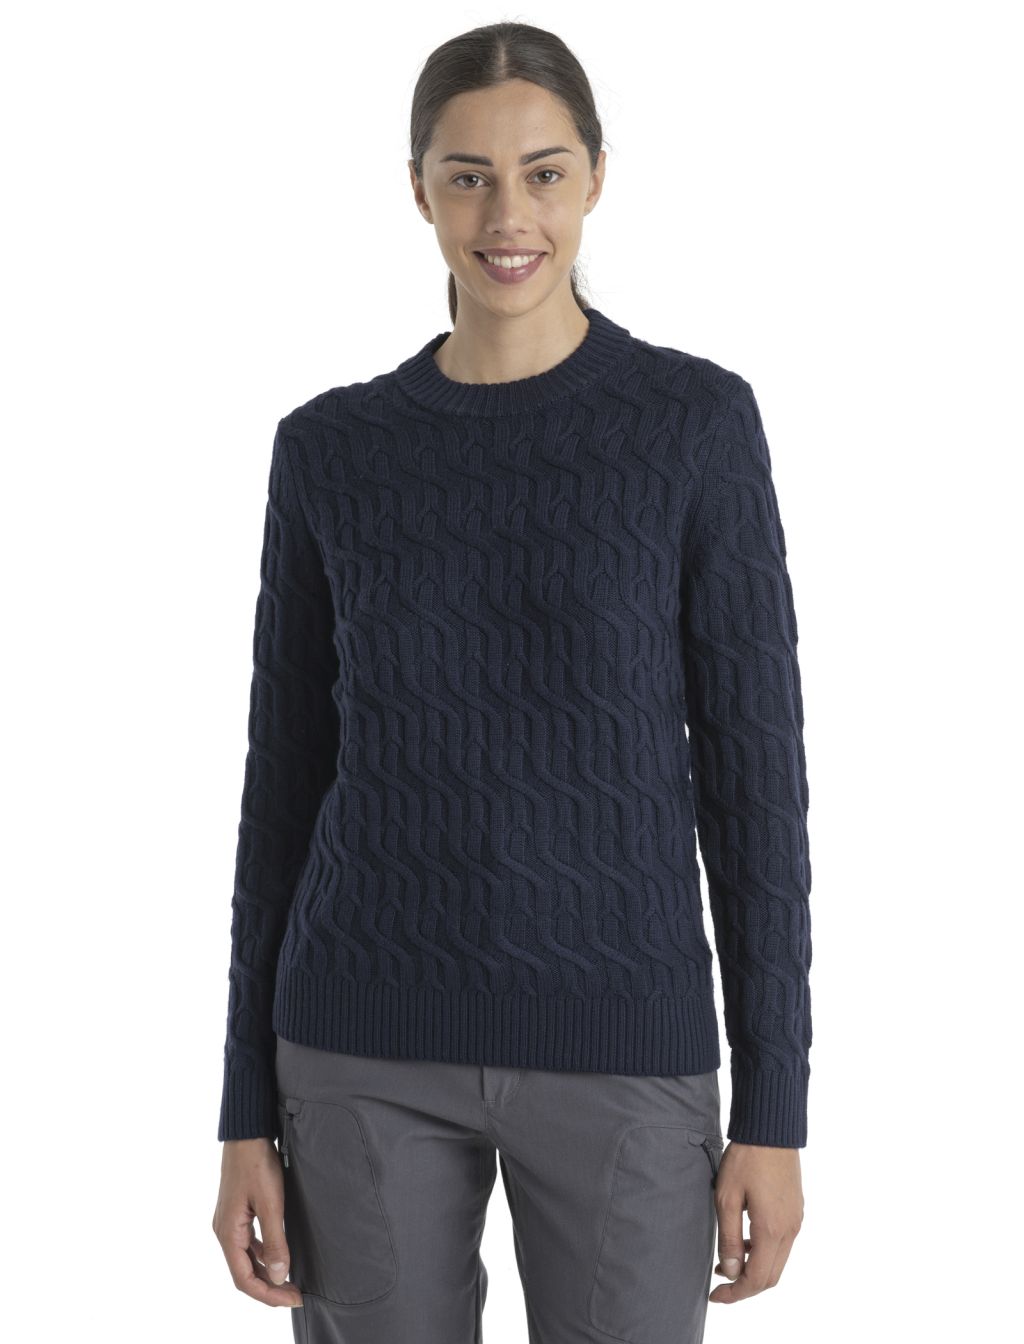 Dámský merino svetr ICEBREAKER Wmns Merino Cable Knit Crewe Sweater, Midnight Navy velikost: S